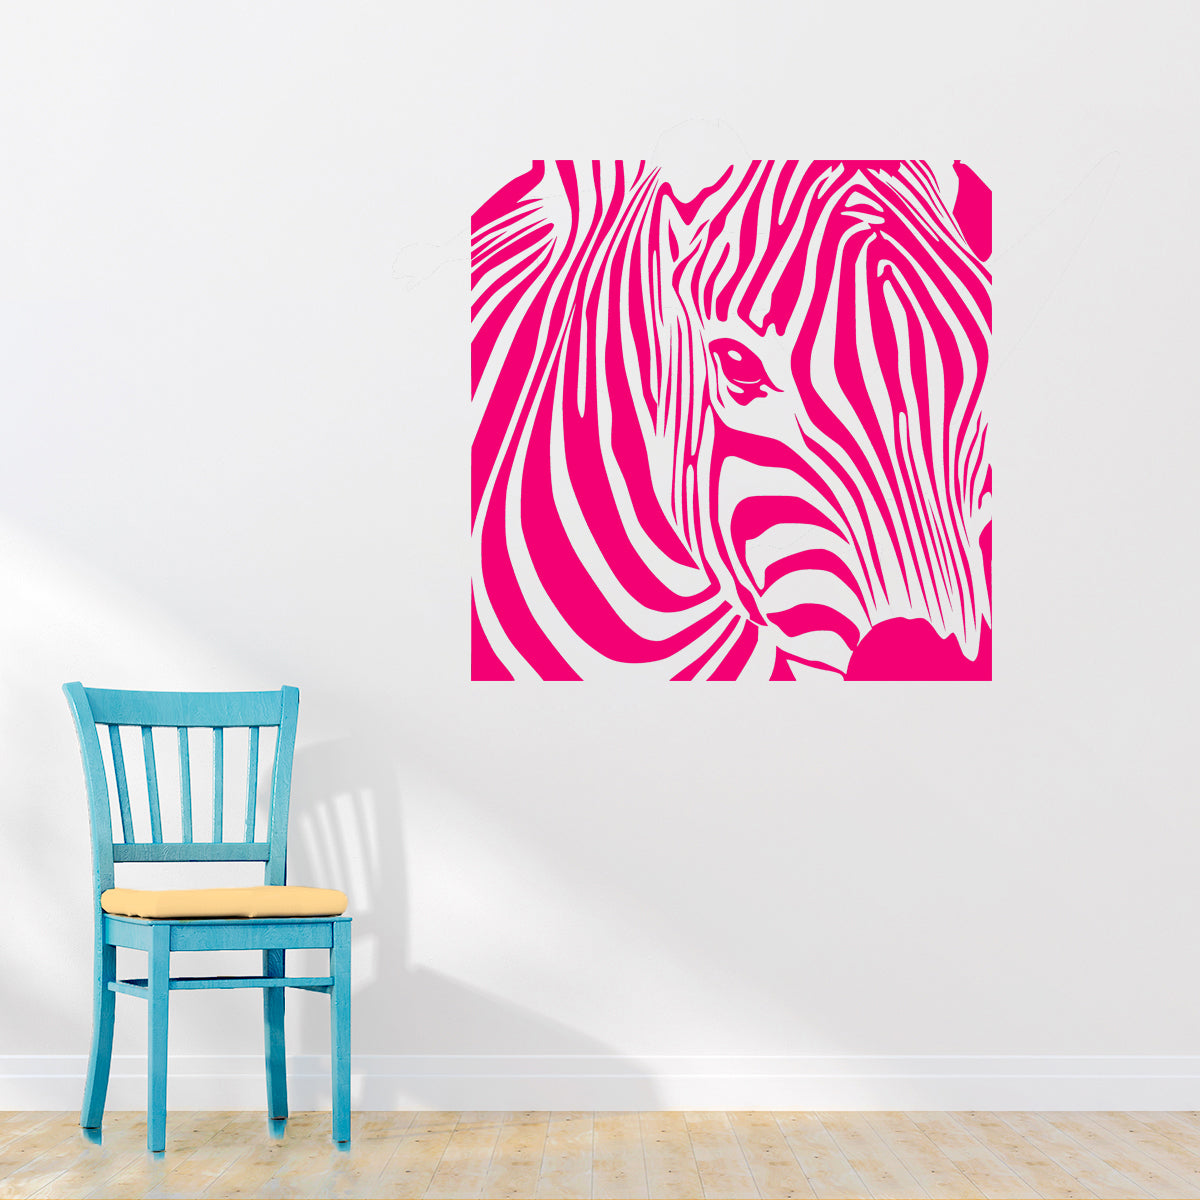 Zebra face | Wall decal